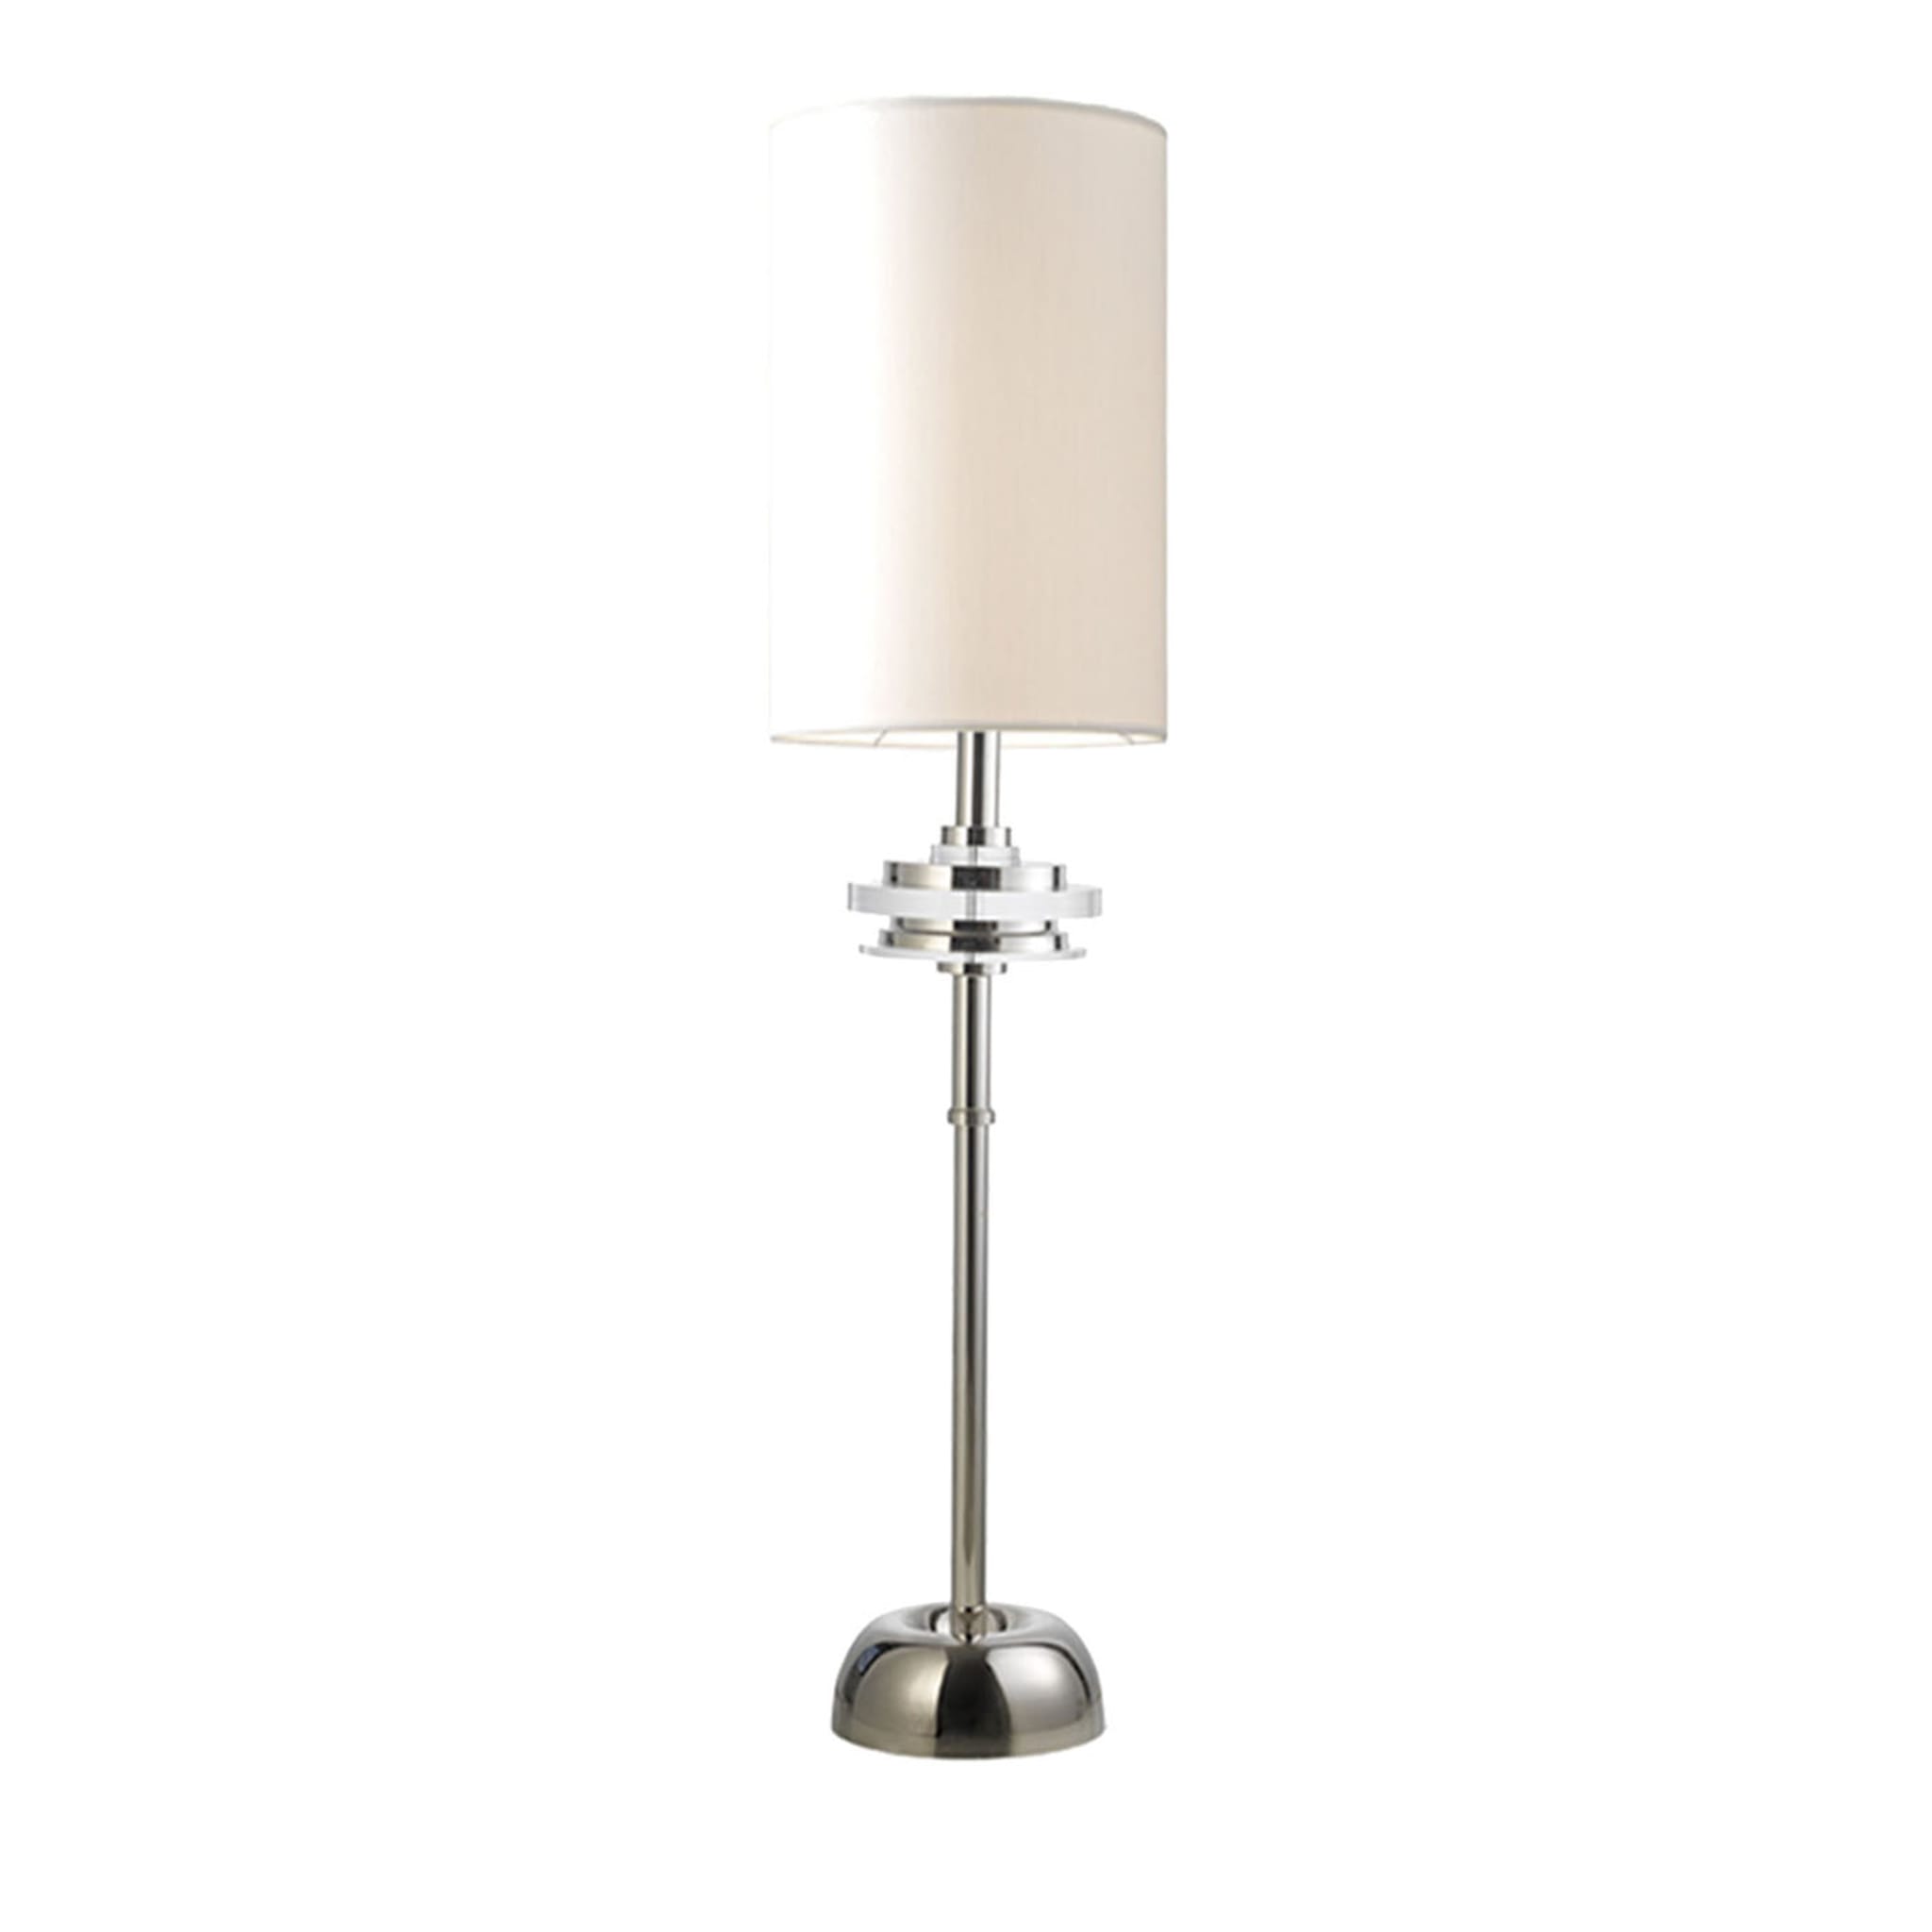 Z629/1 Nickel Table Lamp - Main view